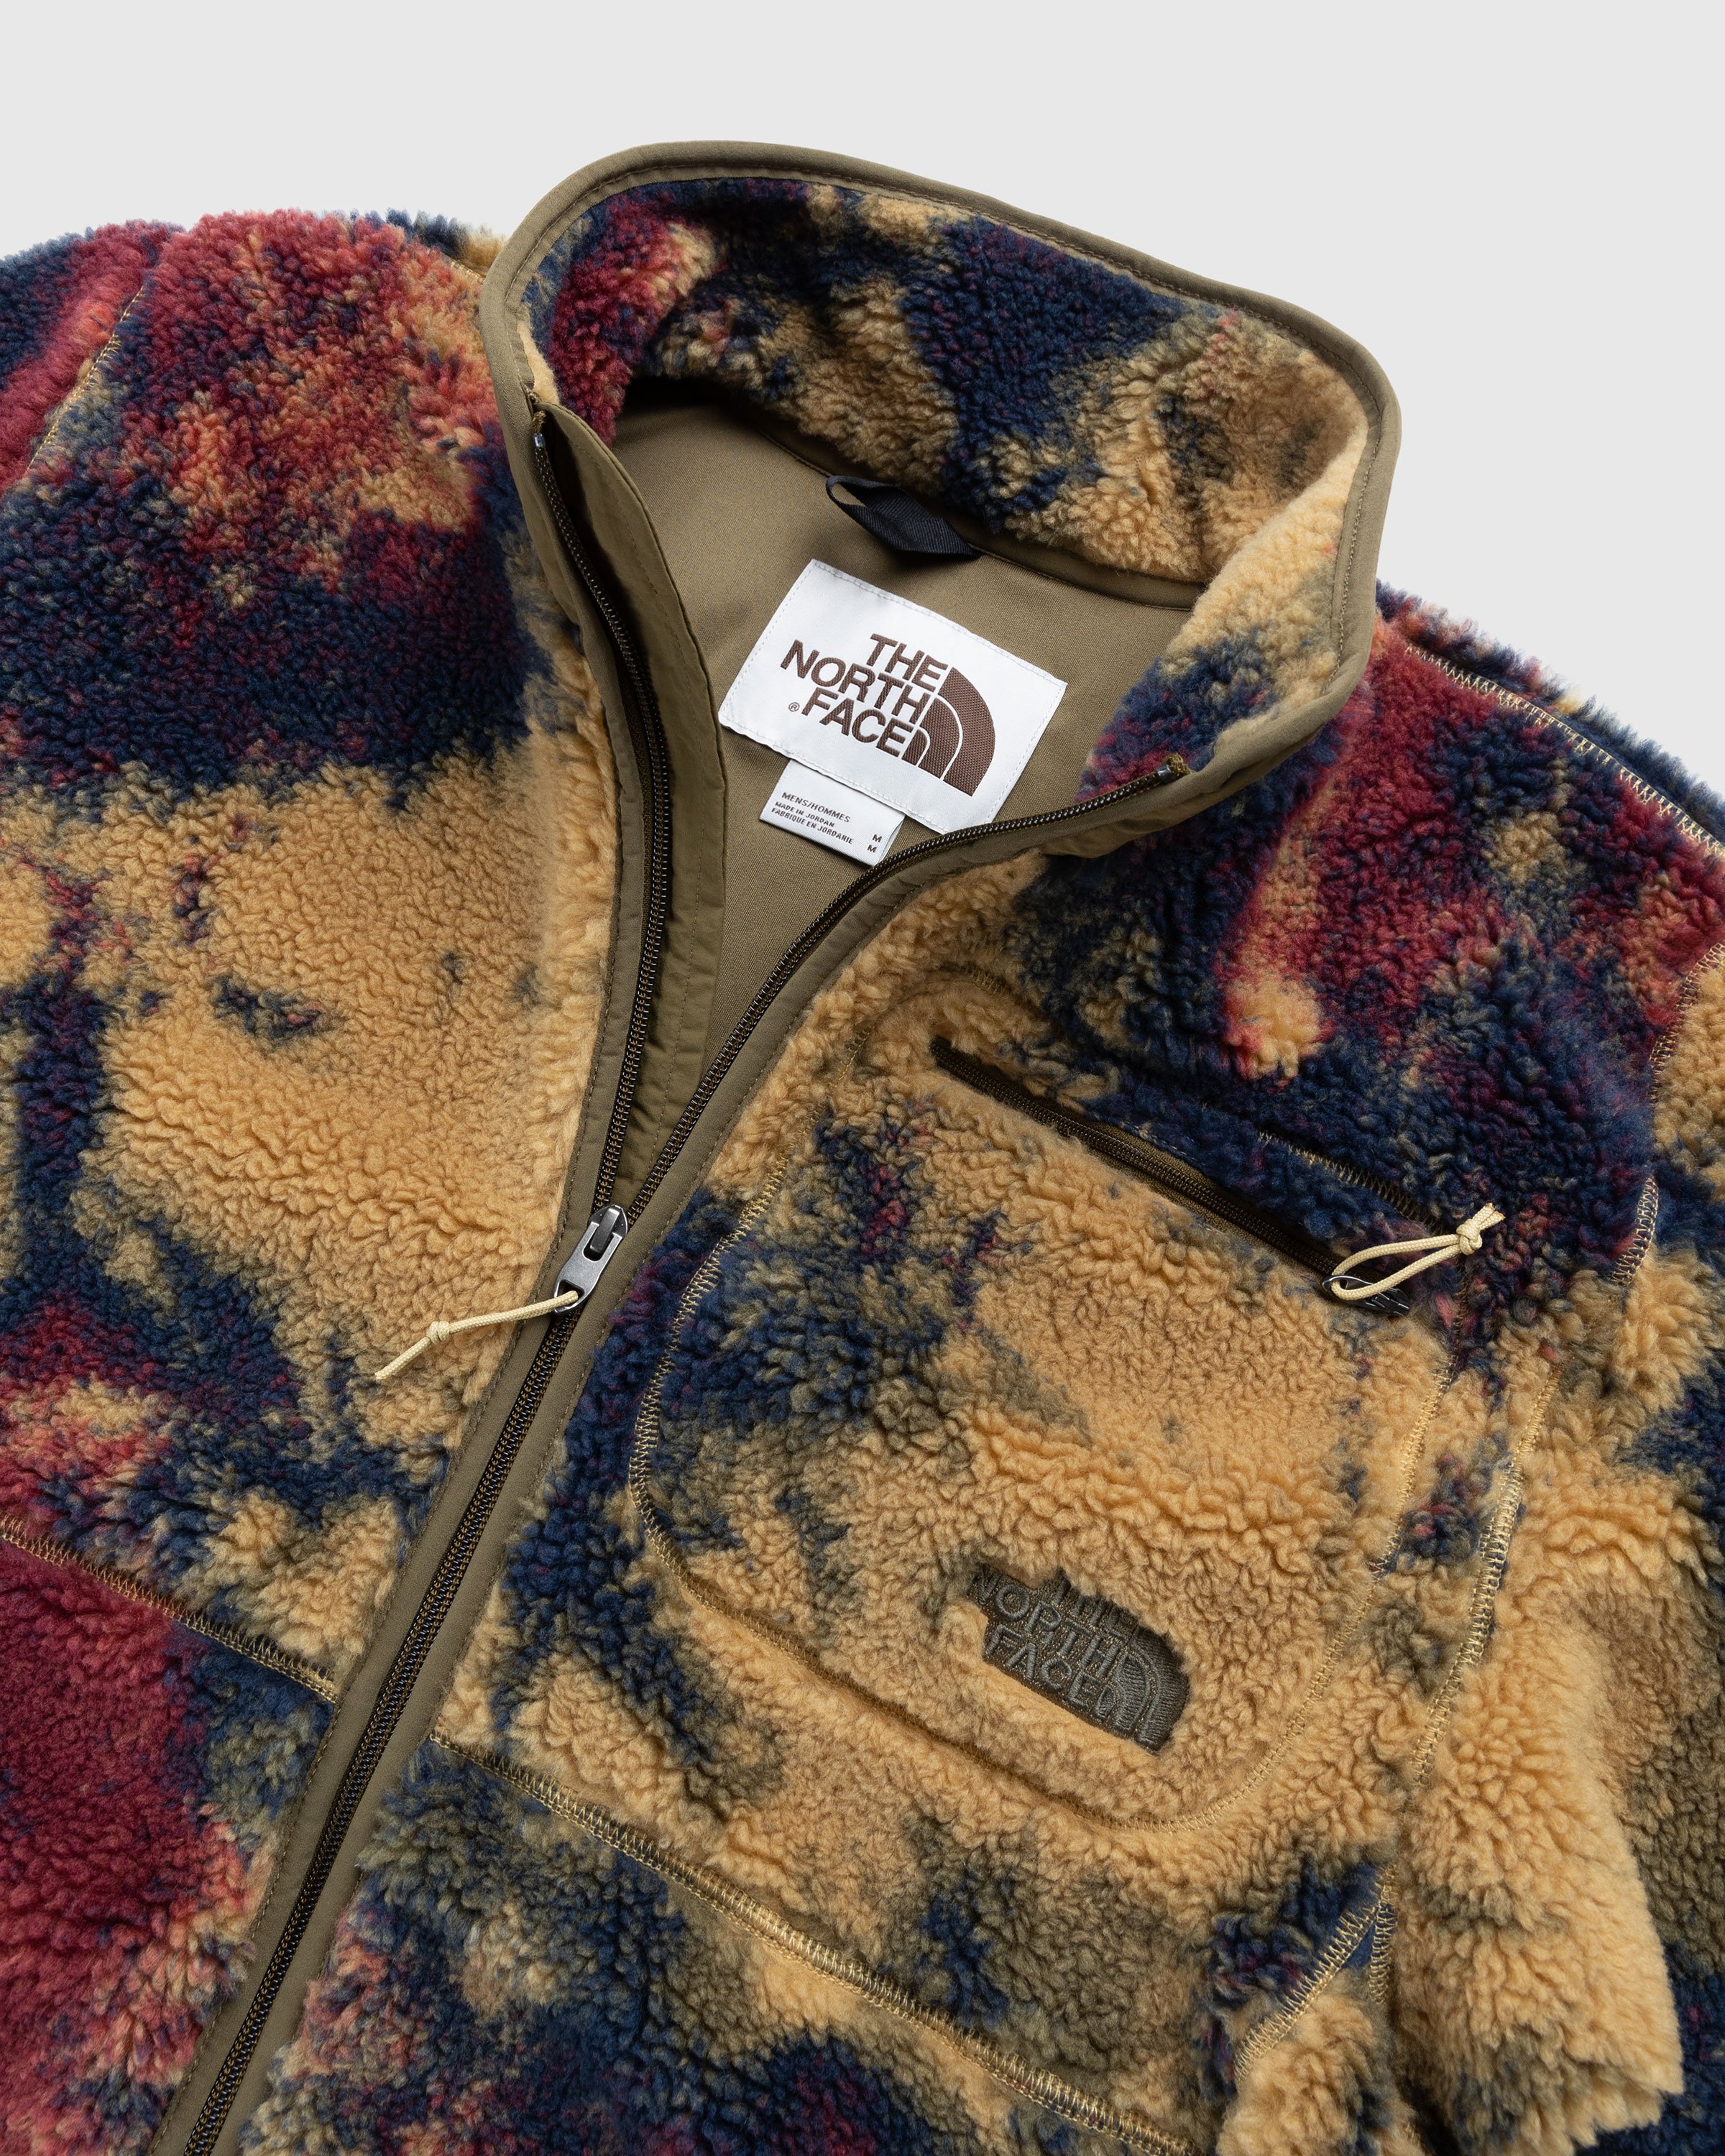 The North Face - Jacquard Extreme Pile Full-Zip Jacket Antelope Tan/Ice Dye Print - Clothing - Multi - Image 4